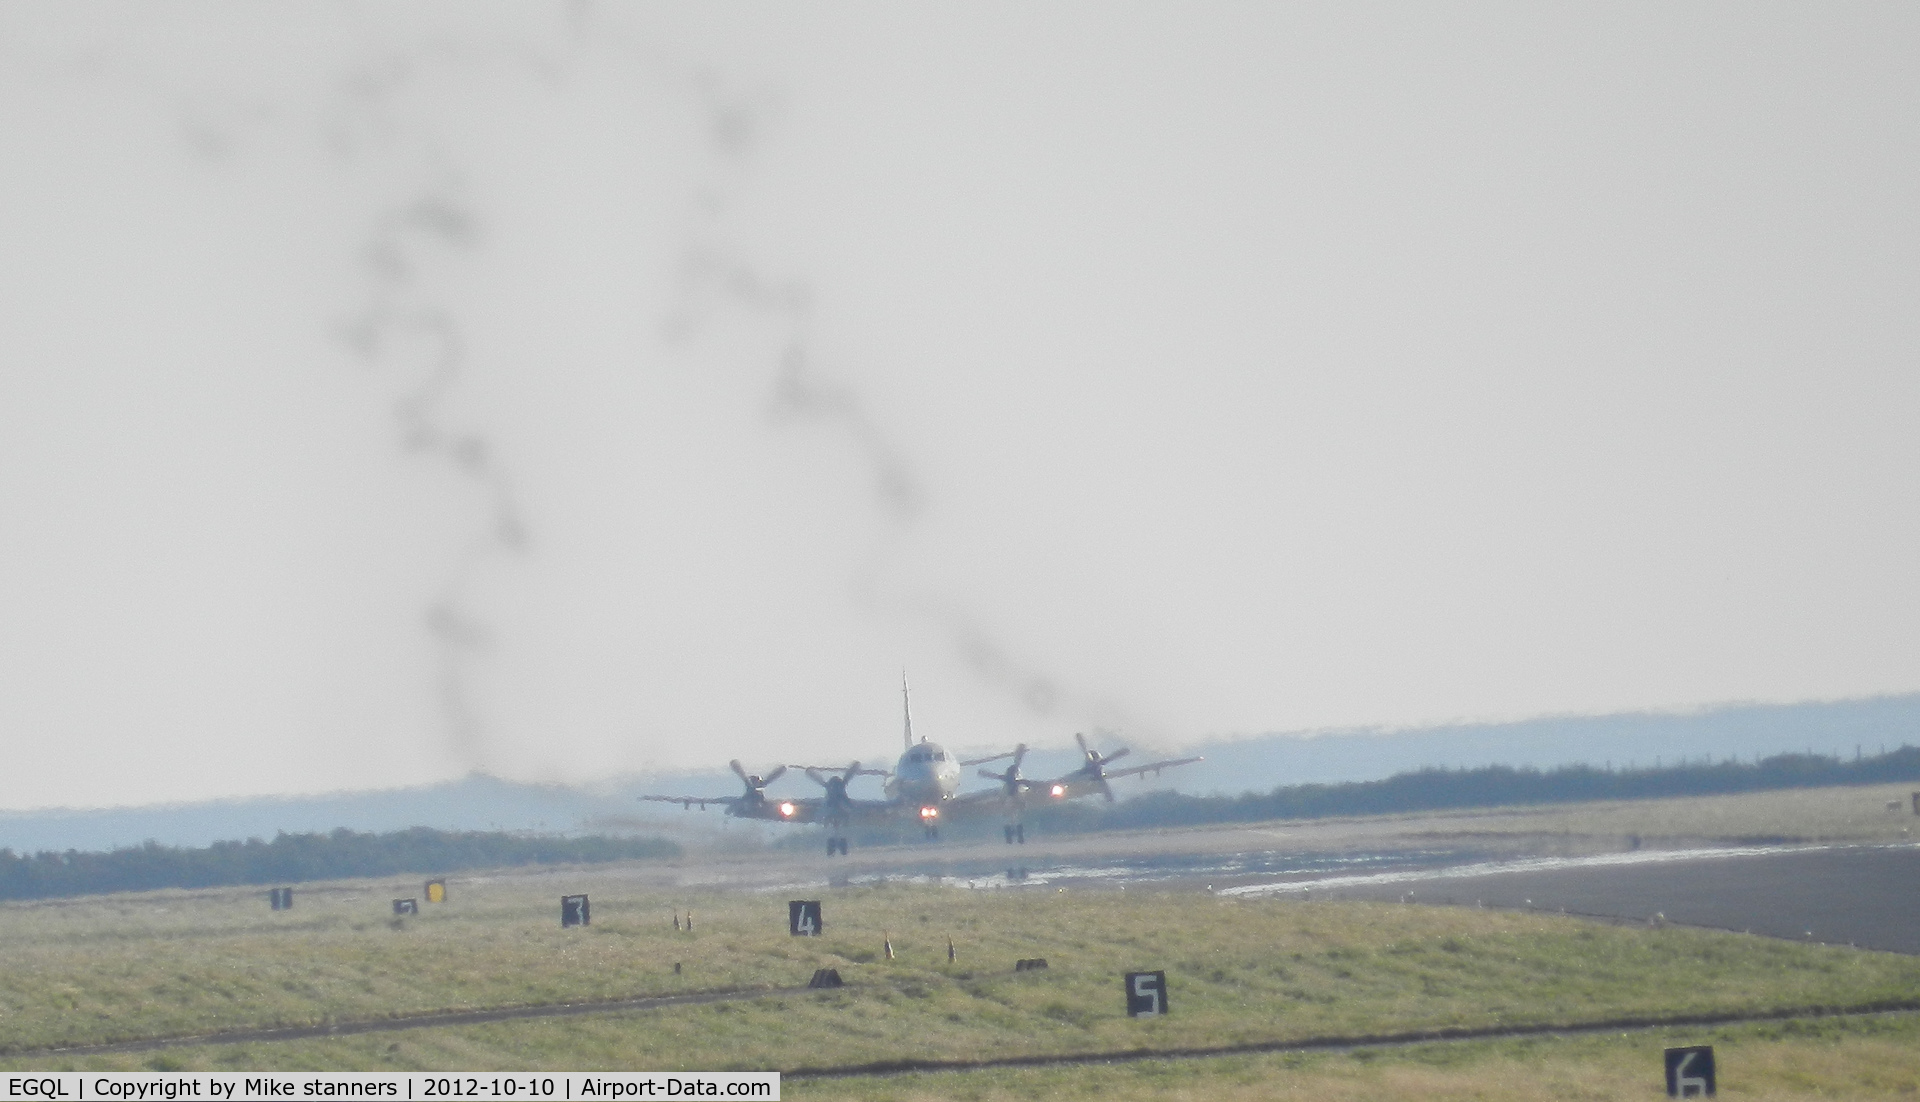 RAF Leuchars Airport, Leuchars, Scotland United Kingdom (EGQL) - VP-62 P-3C Orion 161765 landing runway 27 after a joint warrior sortie